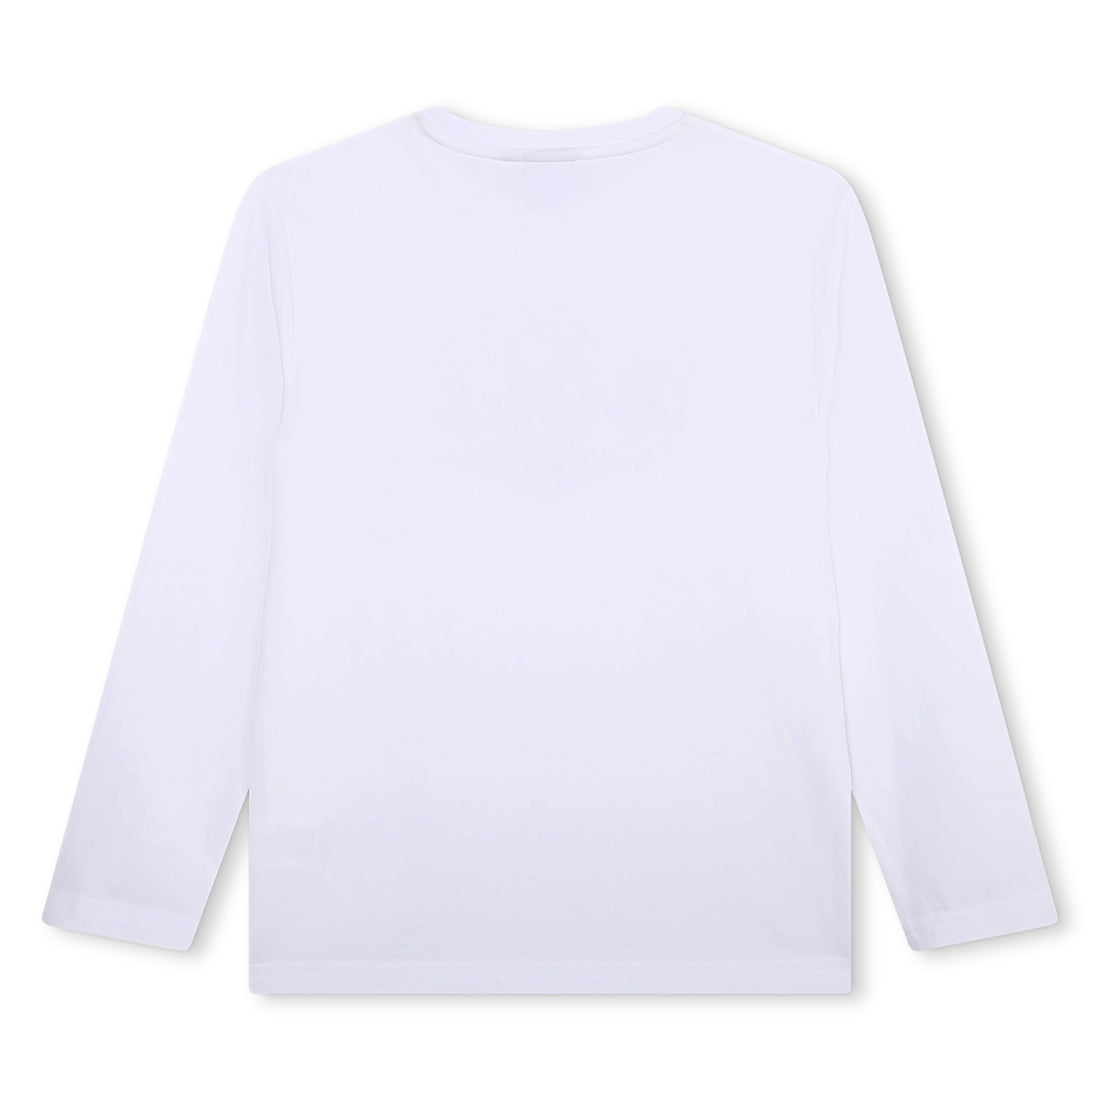 Hugo Boss Long Sleeve T-Shirt Style: J25O86